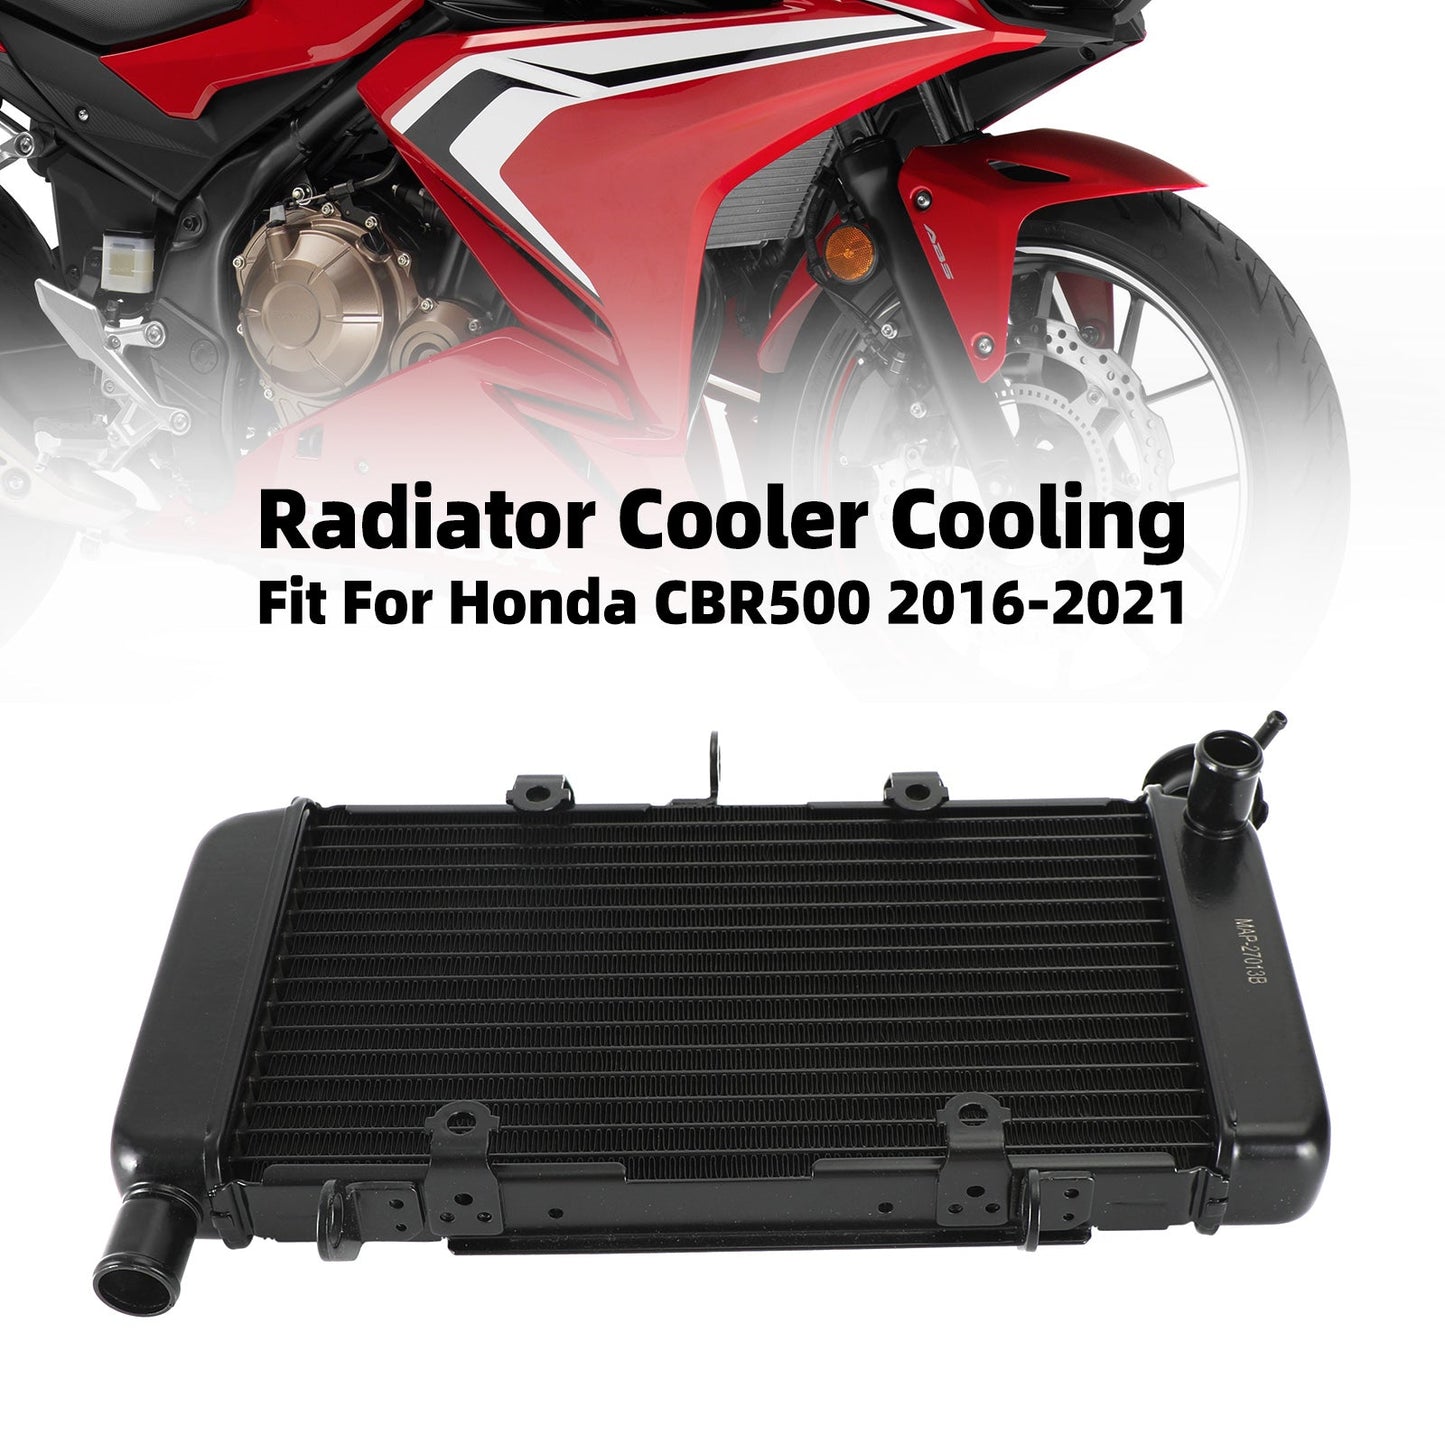 Aluminum Radiator Cooling Cooler Fit For Honda CBR500 CBR 500 2016-2021